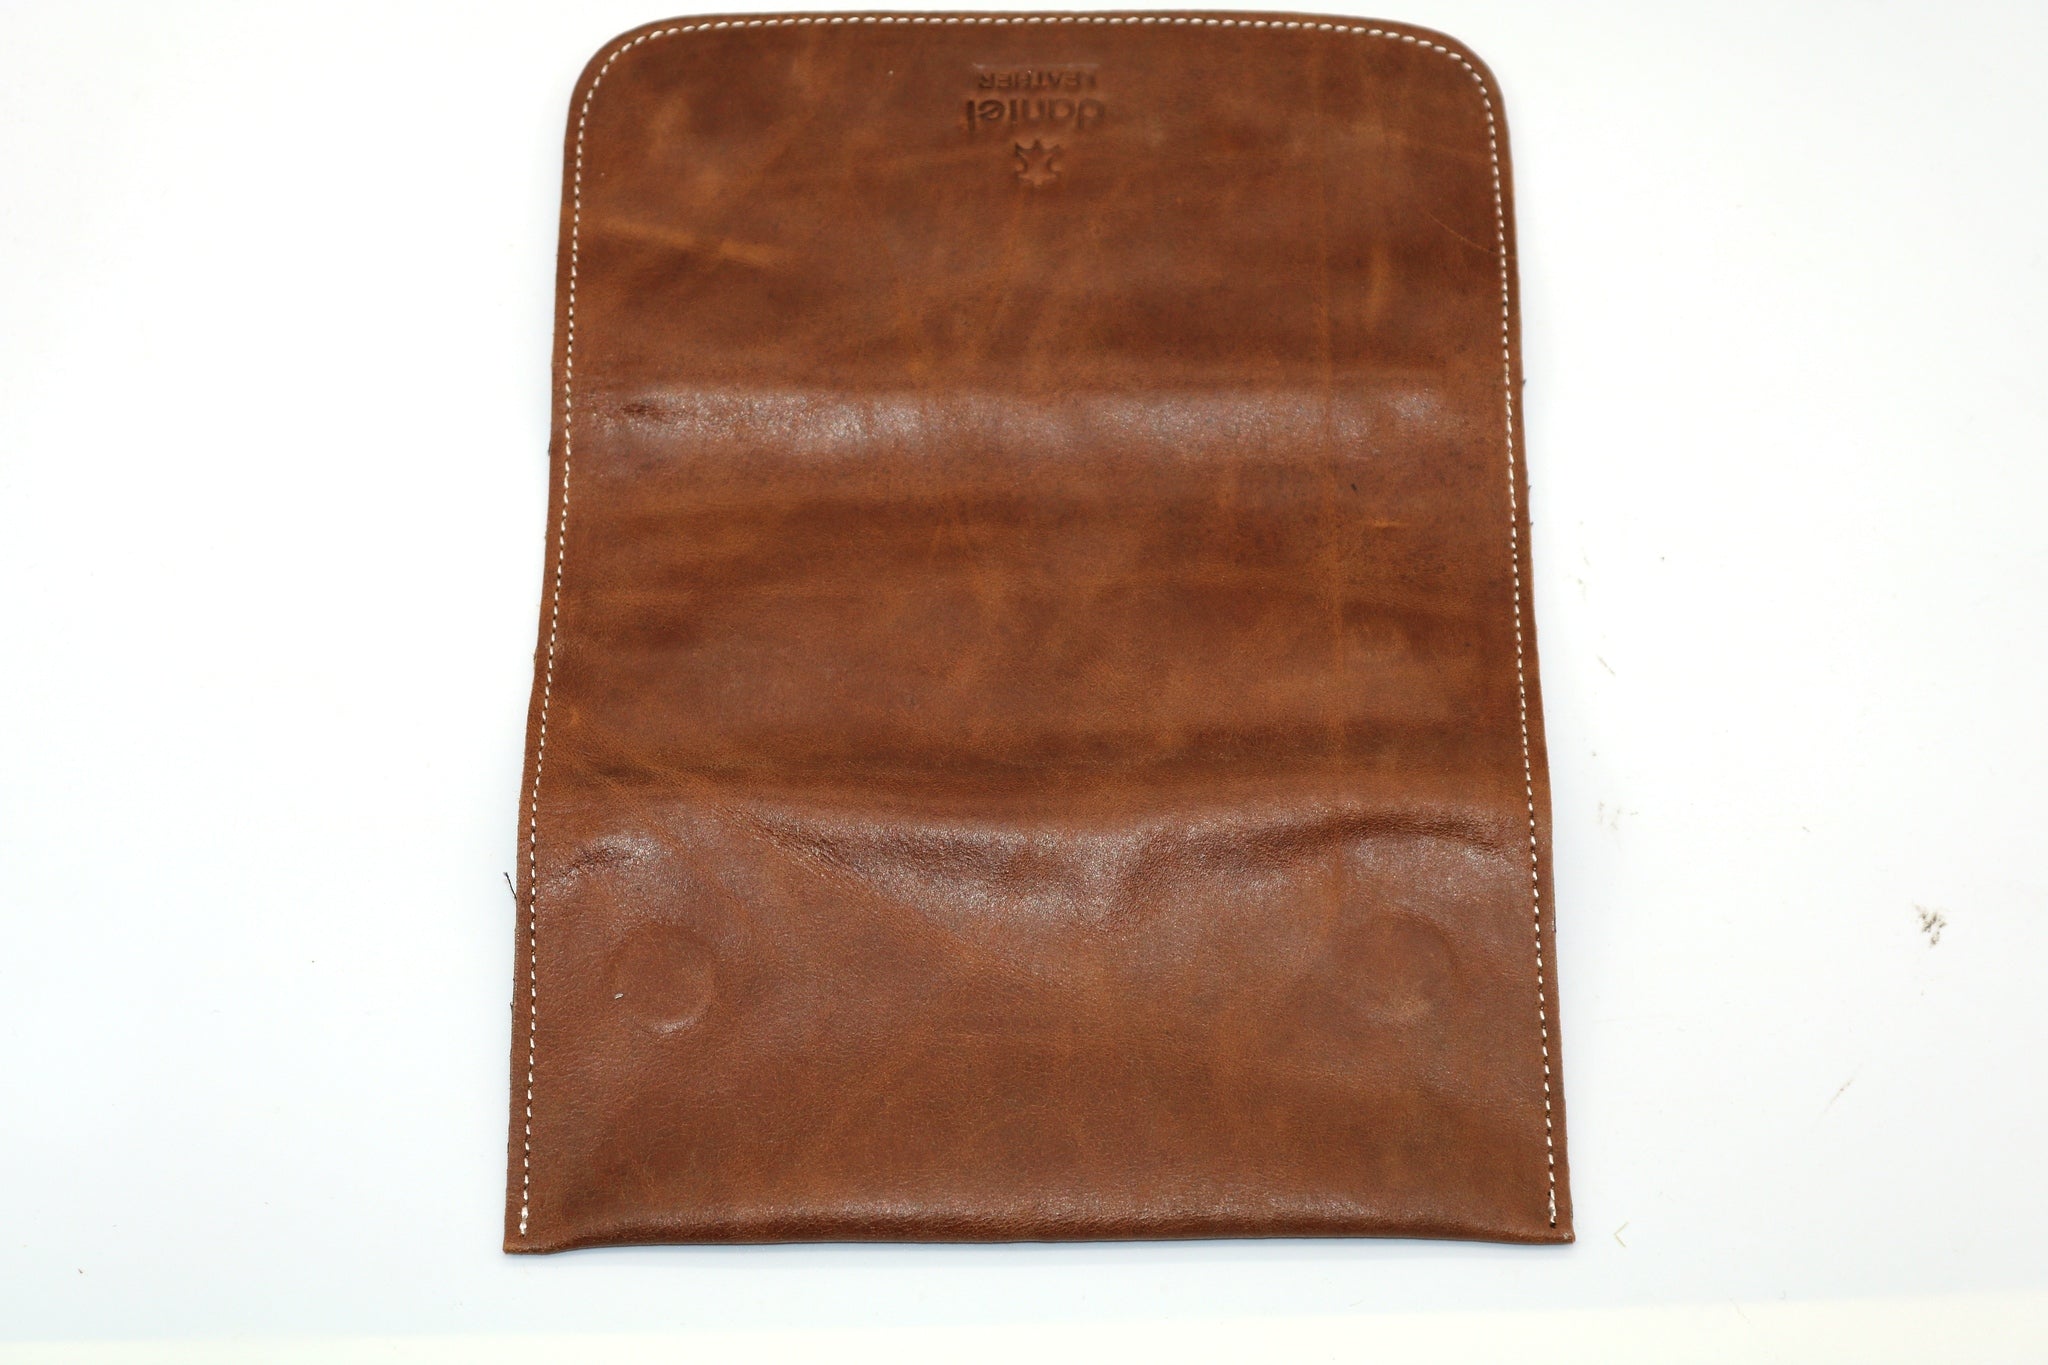 Soft Genuine Leather Smoking Tobacco Pocket Pouch